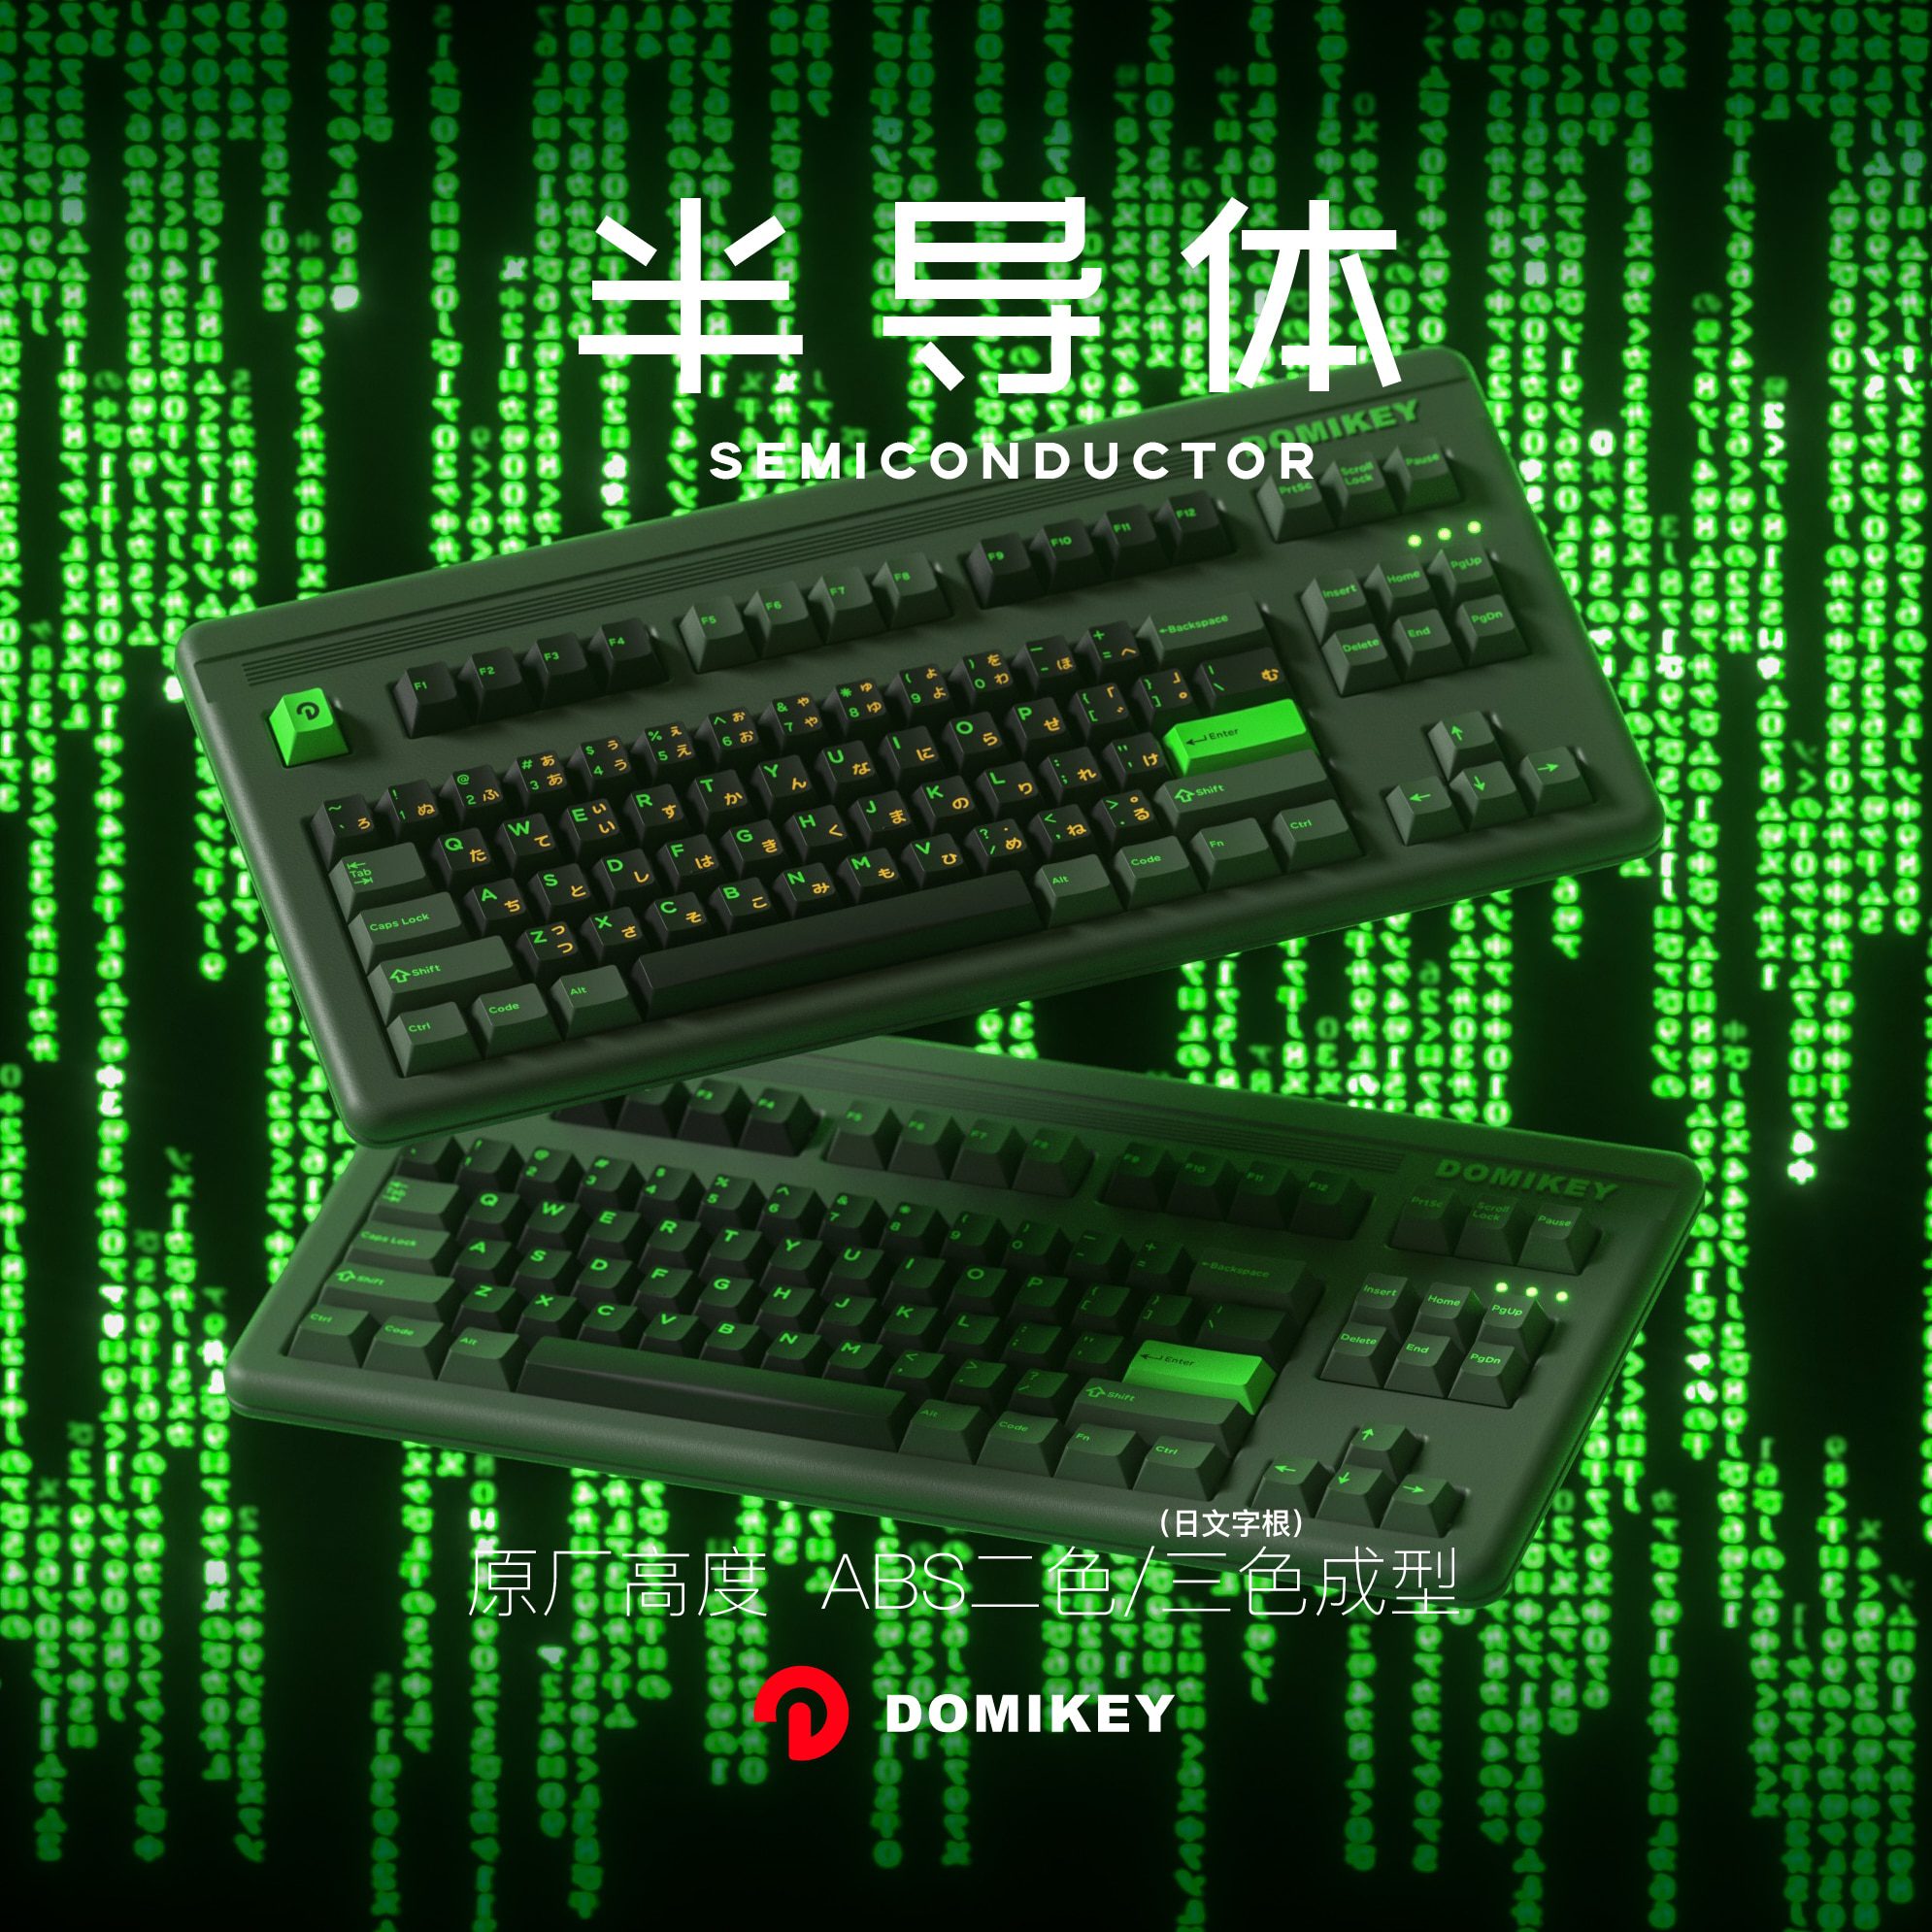 Domikey Single Chip Cherry Profile abs doubleshot keycap for mx stem keyboard poker 87 104 gh60 xd64 xd68 xd84 BM60 BM65